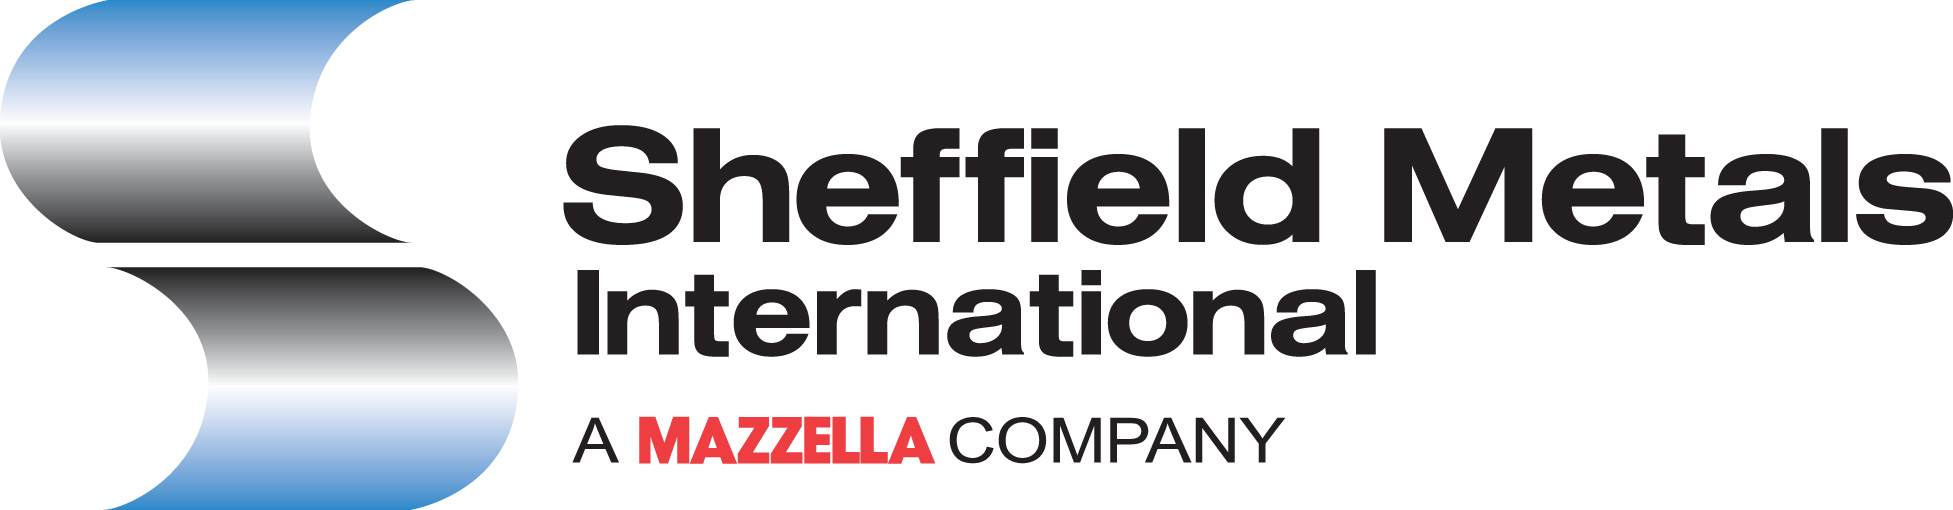 sheffield-logo-registered